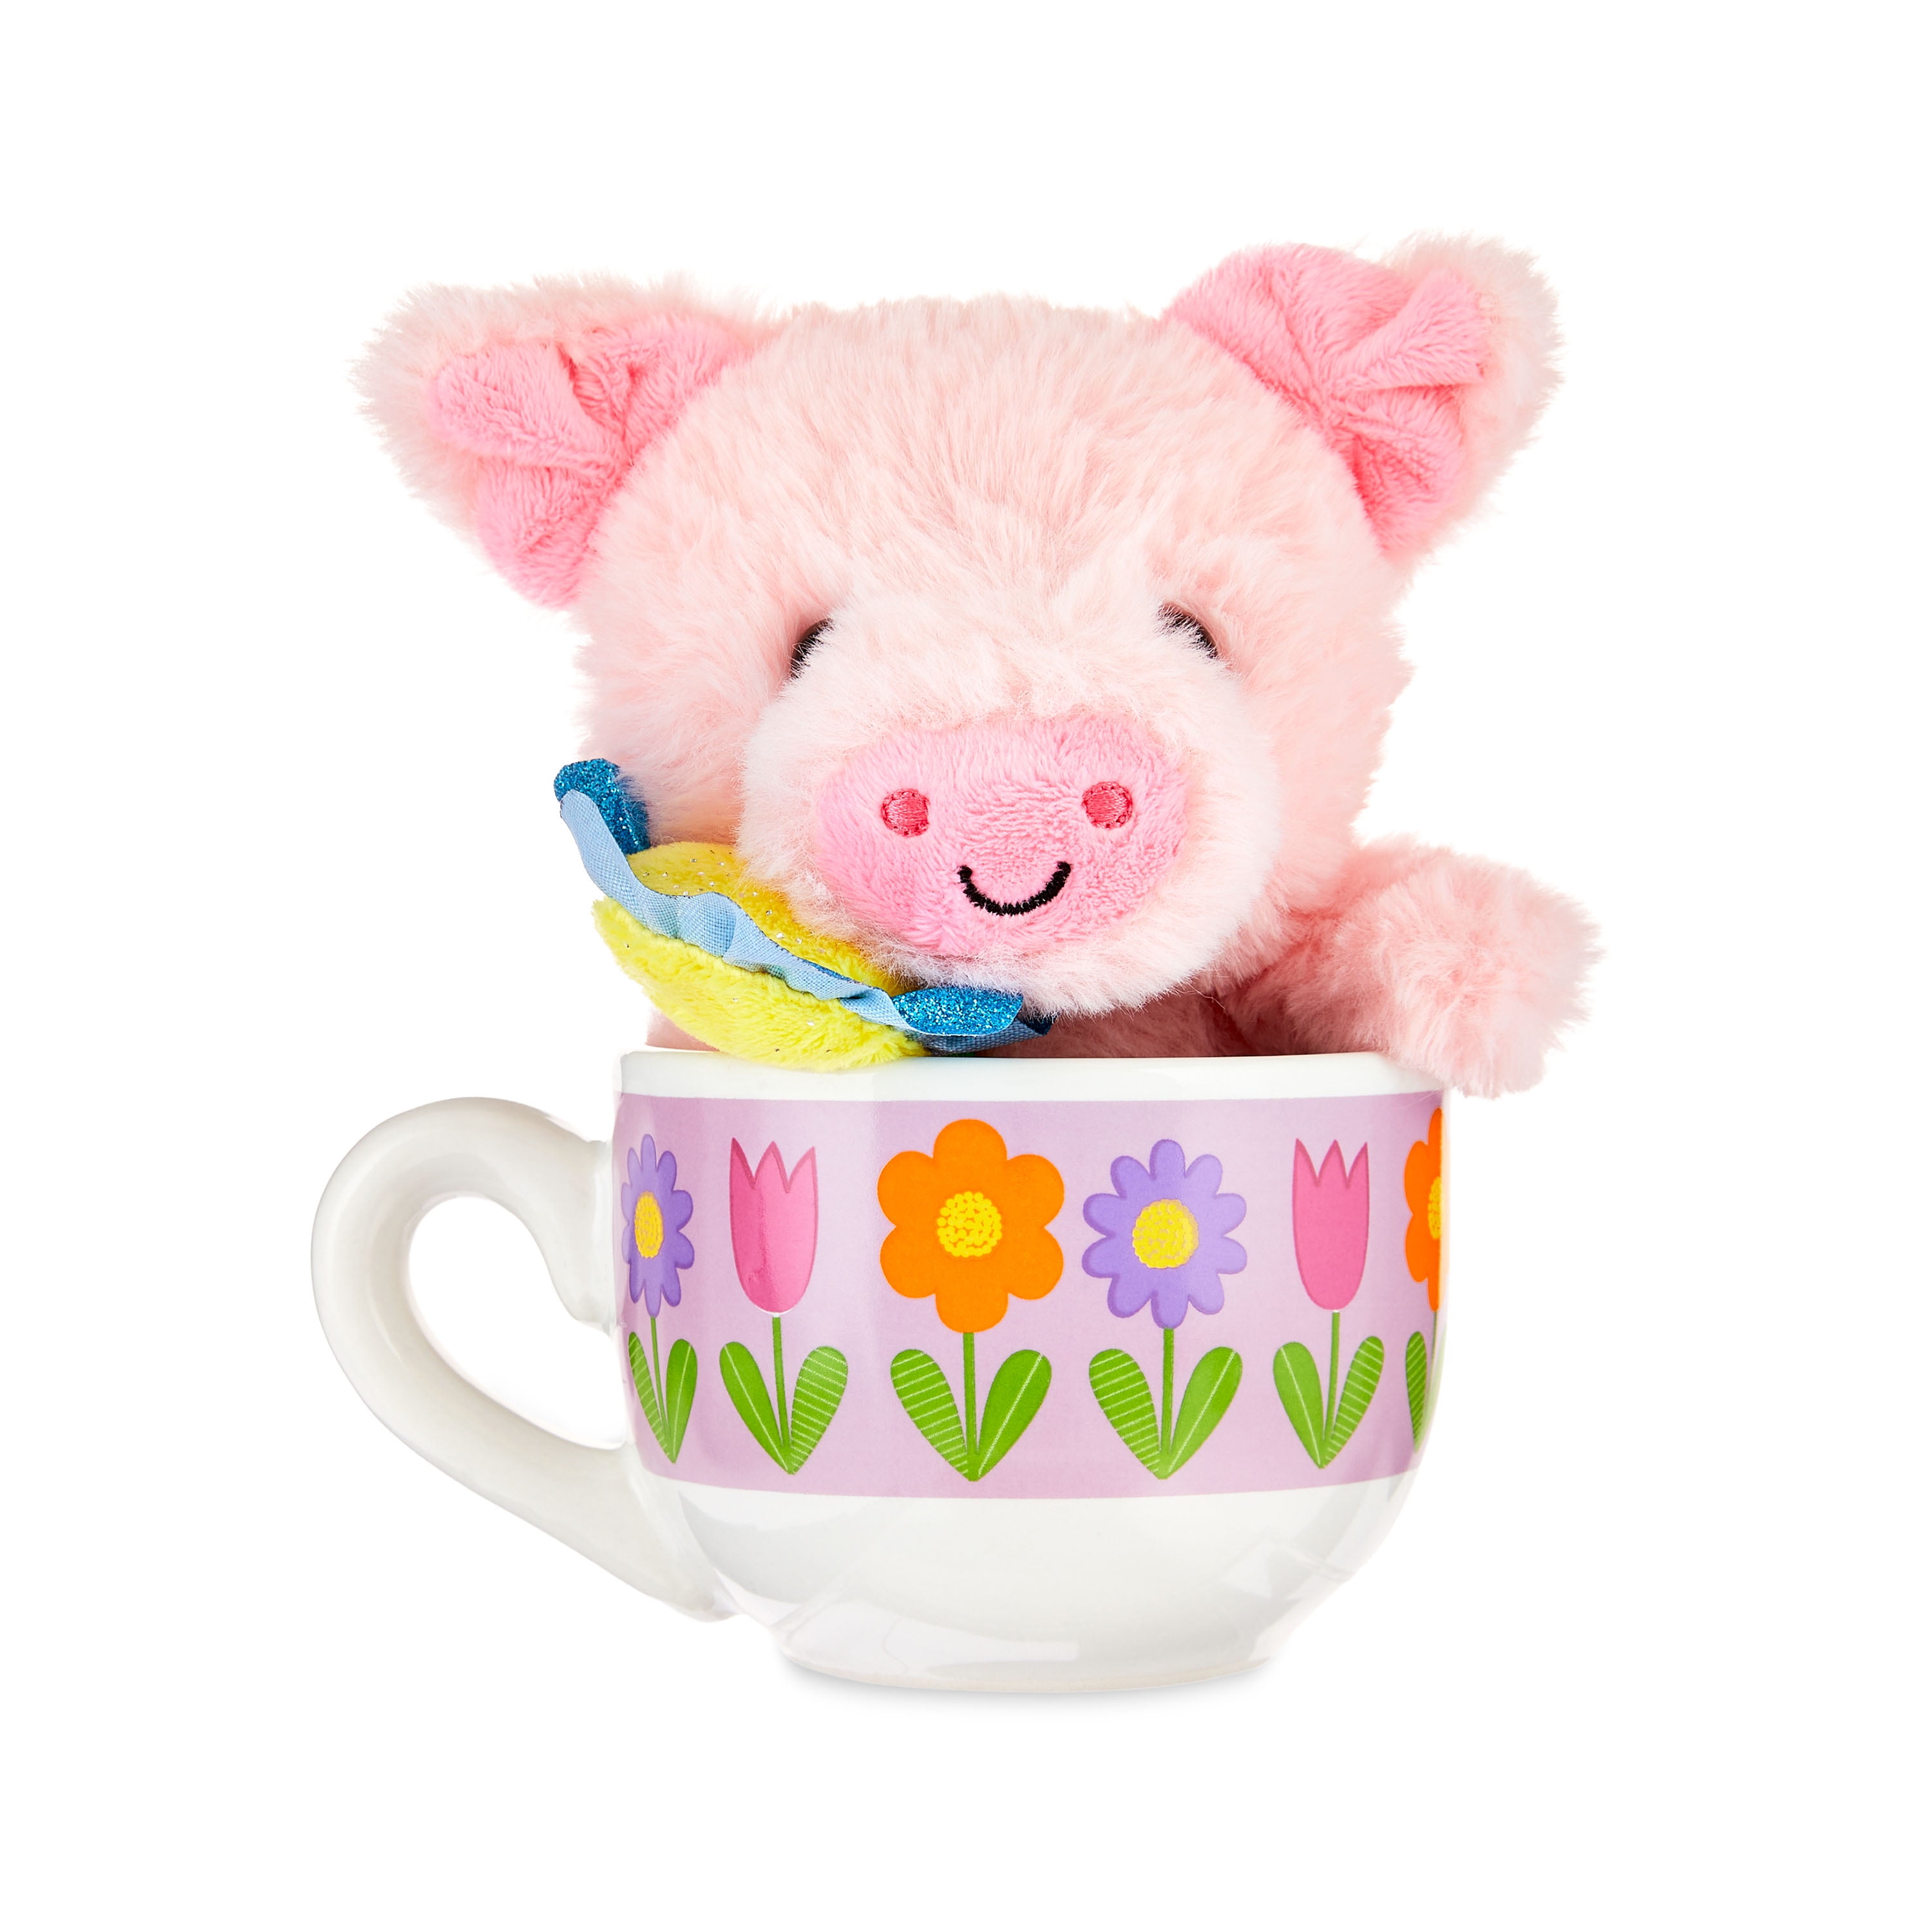 "Way to Celebrate! Easter Plush in Soup Mug, Pig"